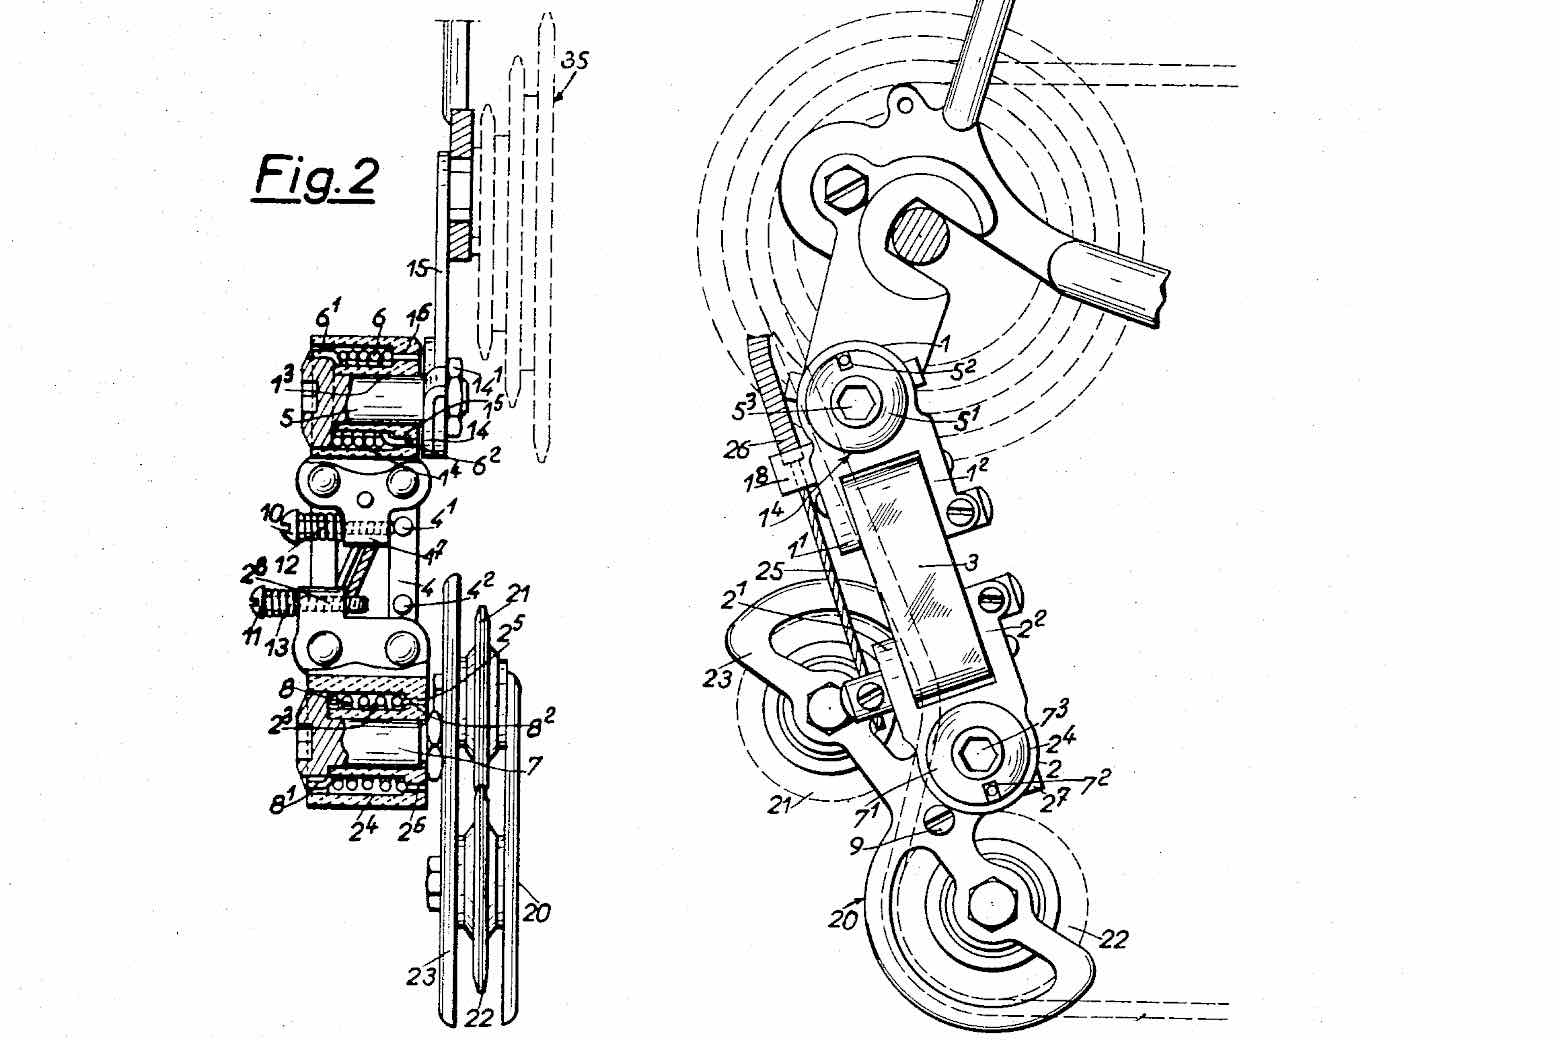 US Patent 3,364,763 - Simplex Prestige (537) main image